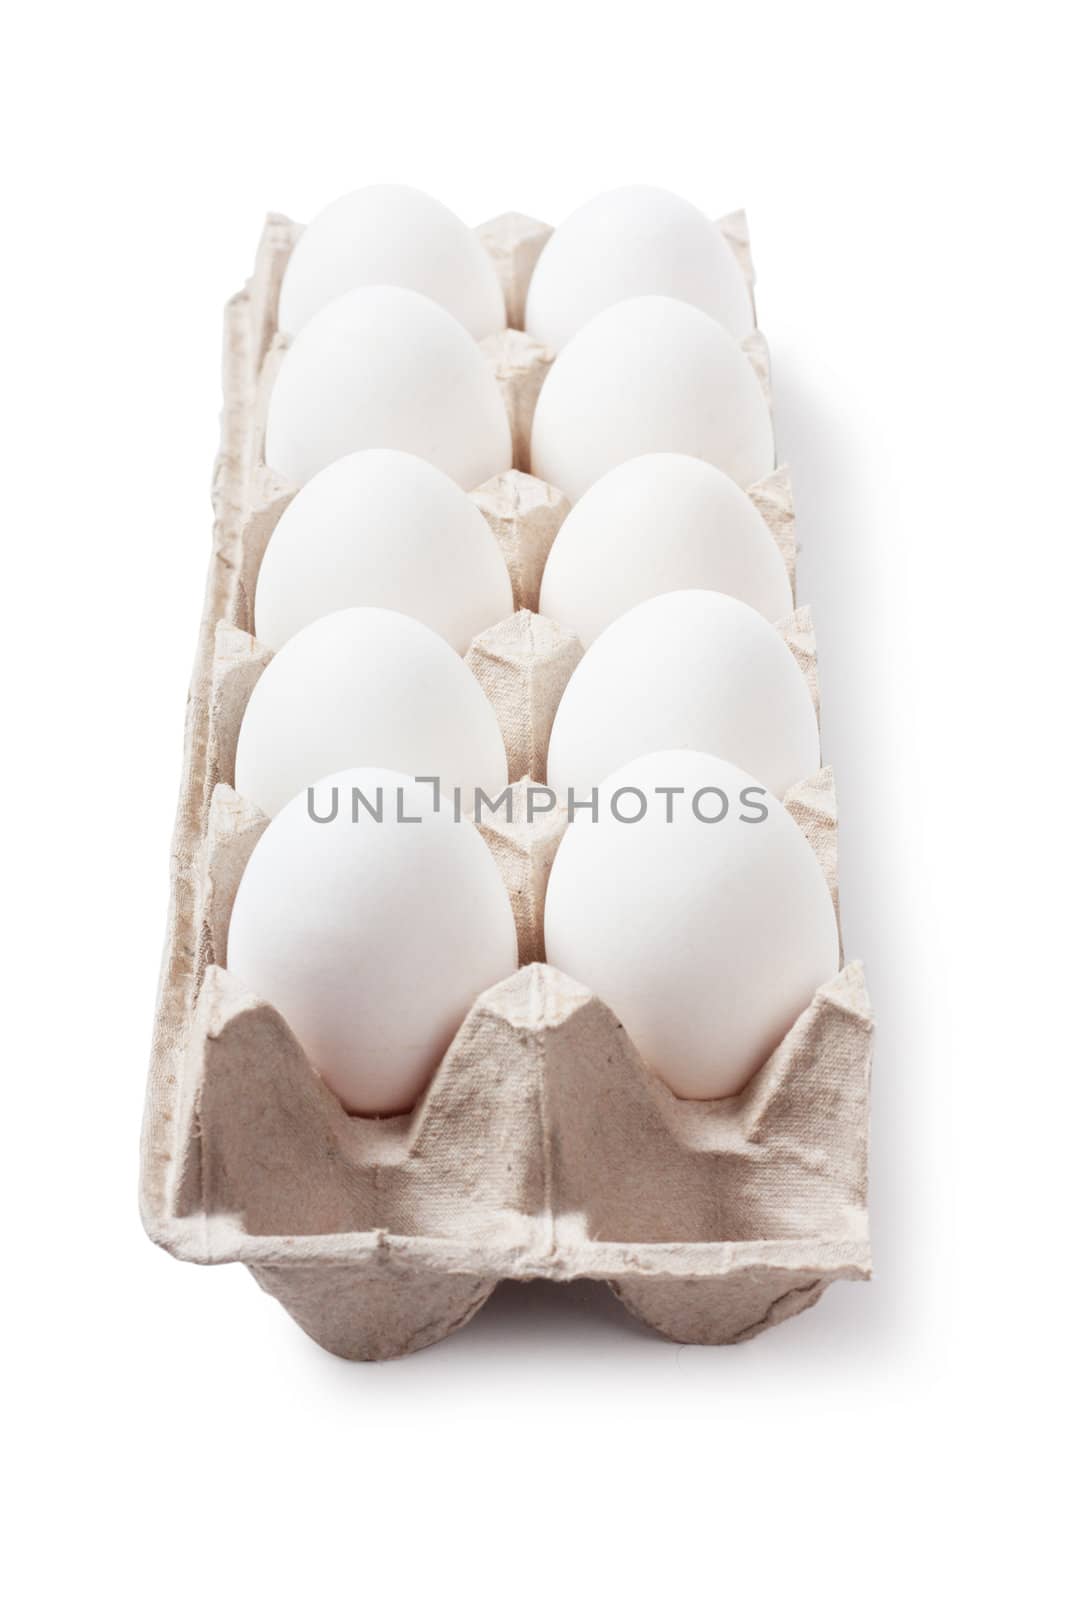 White eggs in carton. Nutritious eating.